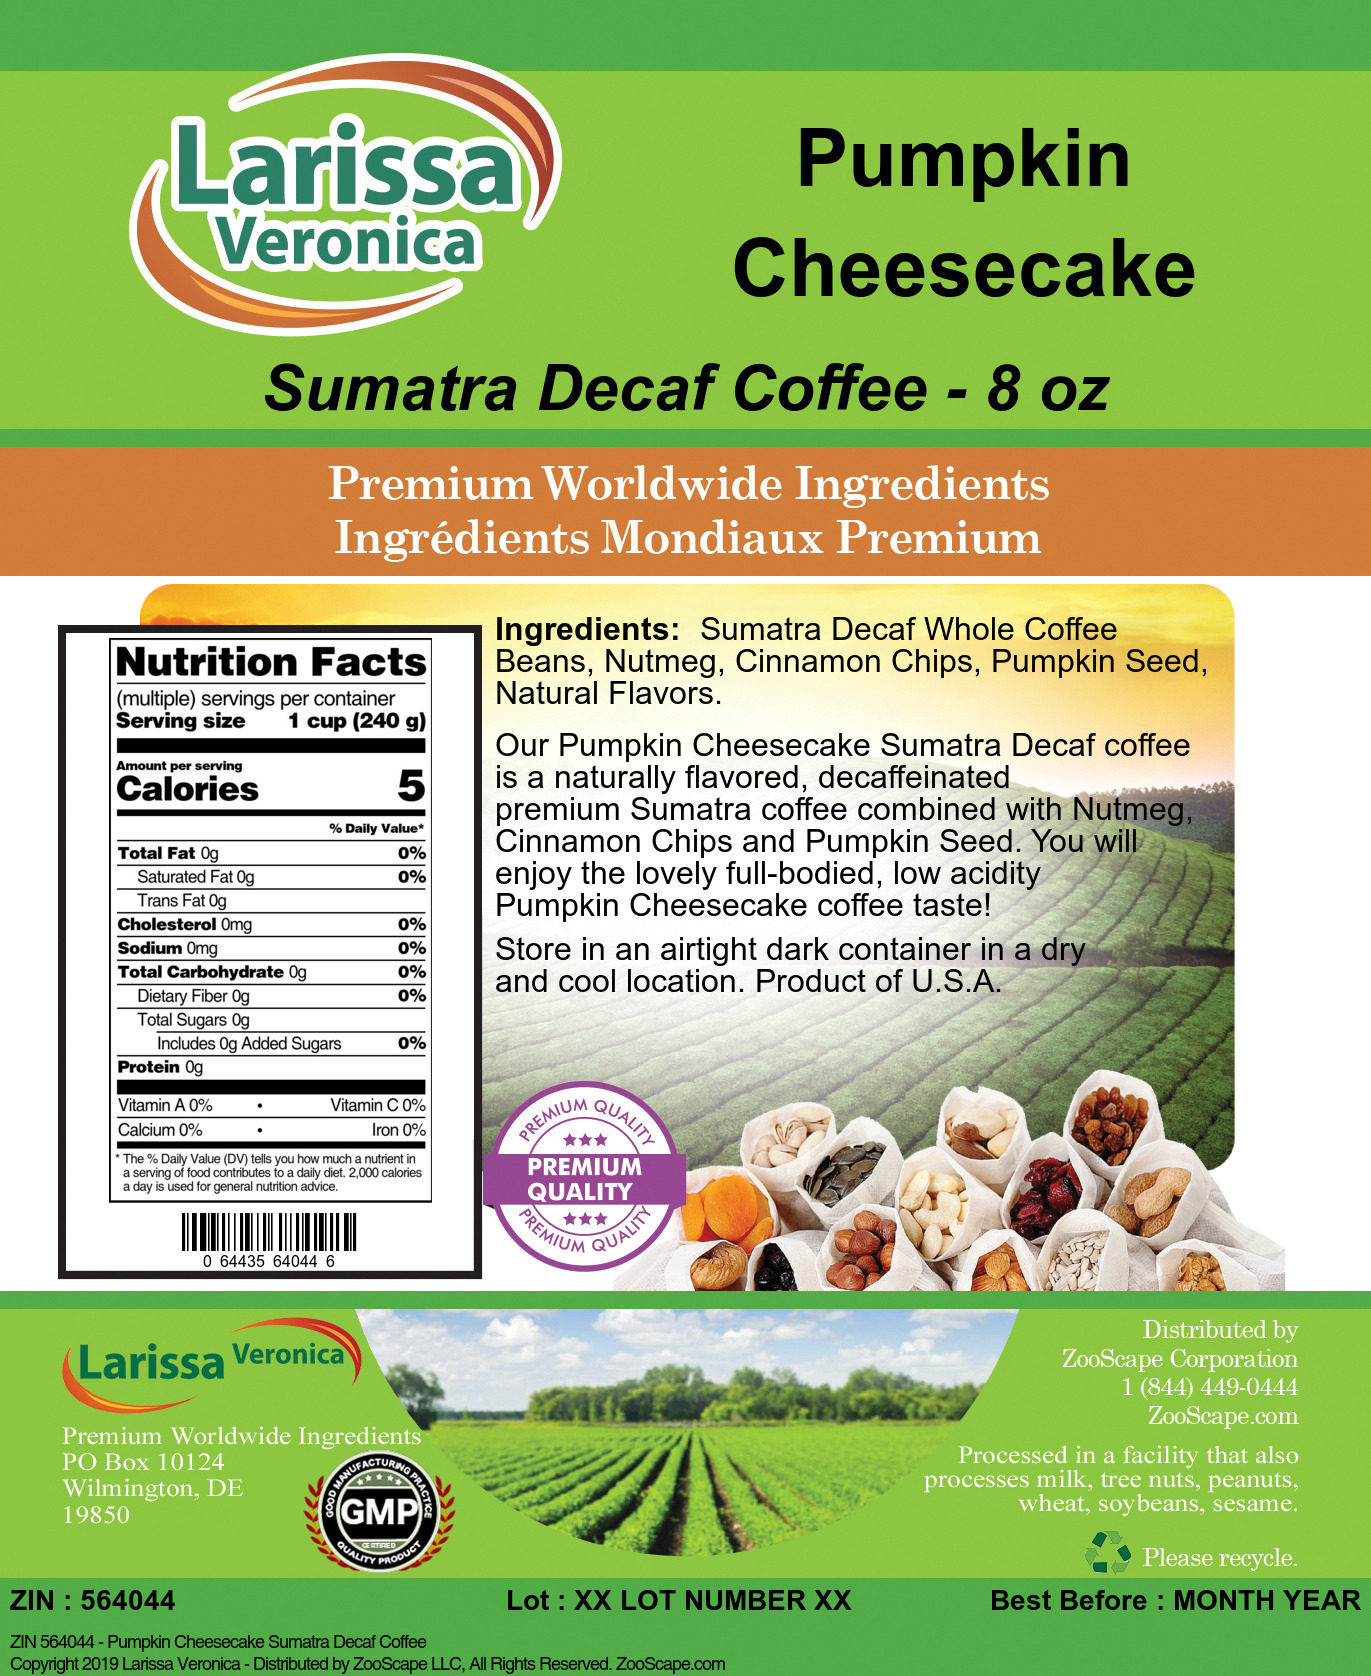 Pumpkin Cheesecake Sumatra Decaf Coffee - Label